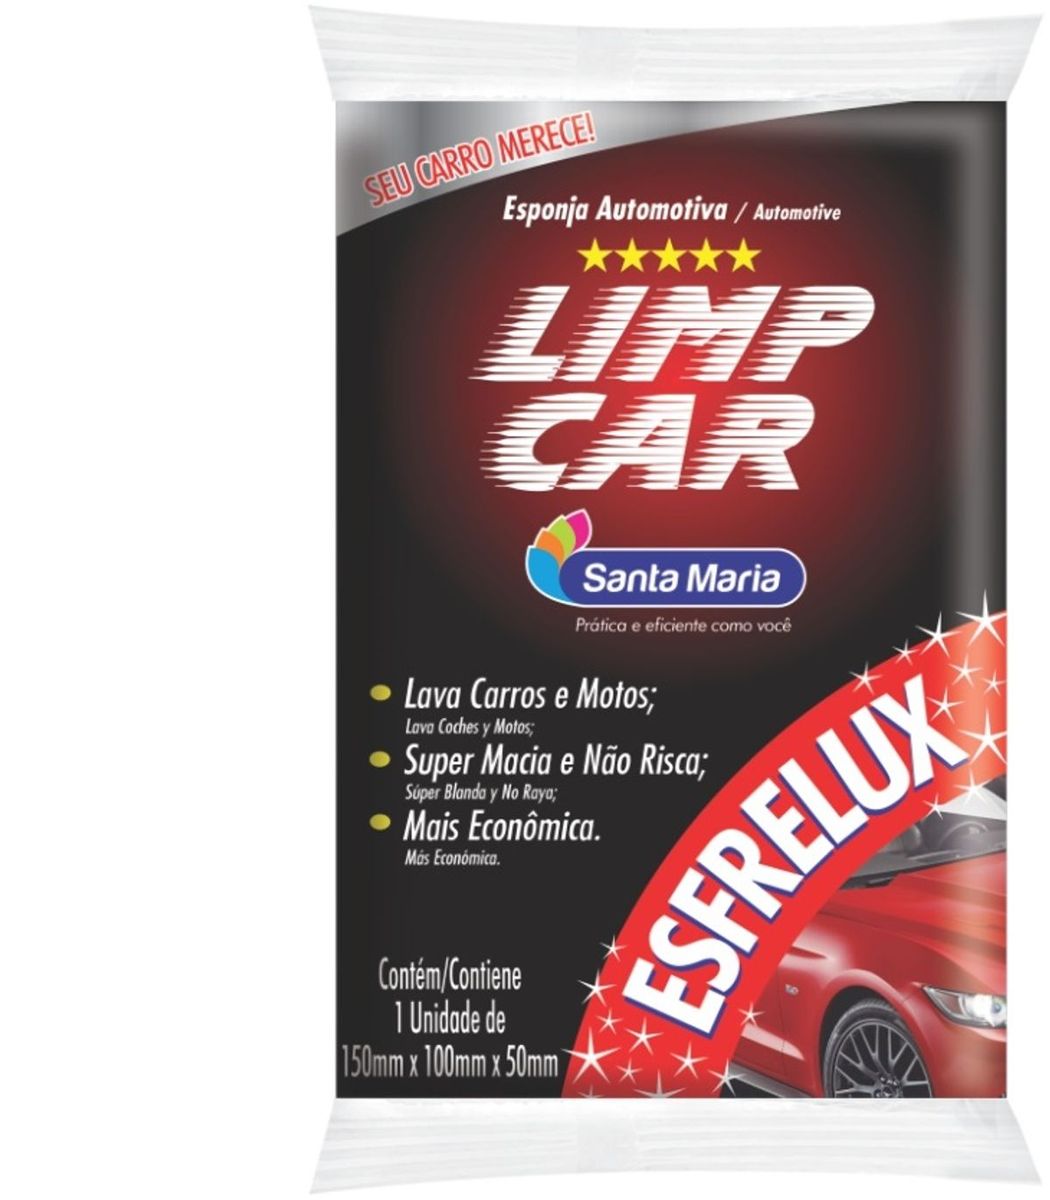 Esponja Automotiva Limp Car Esfrelux